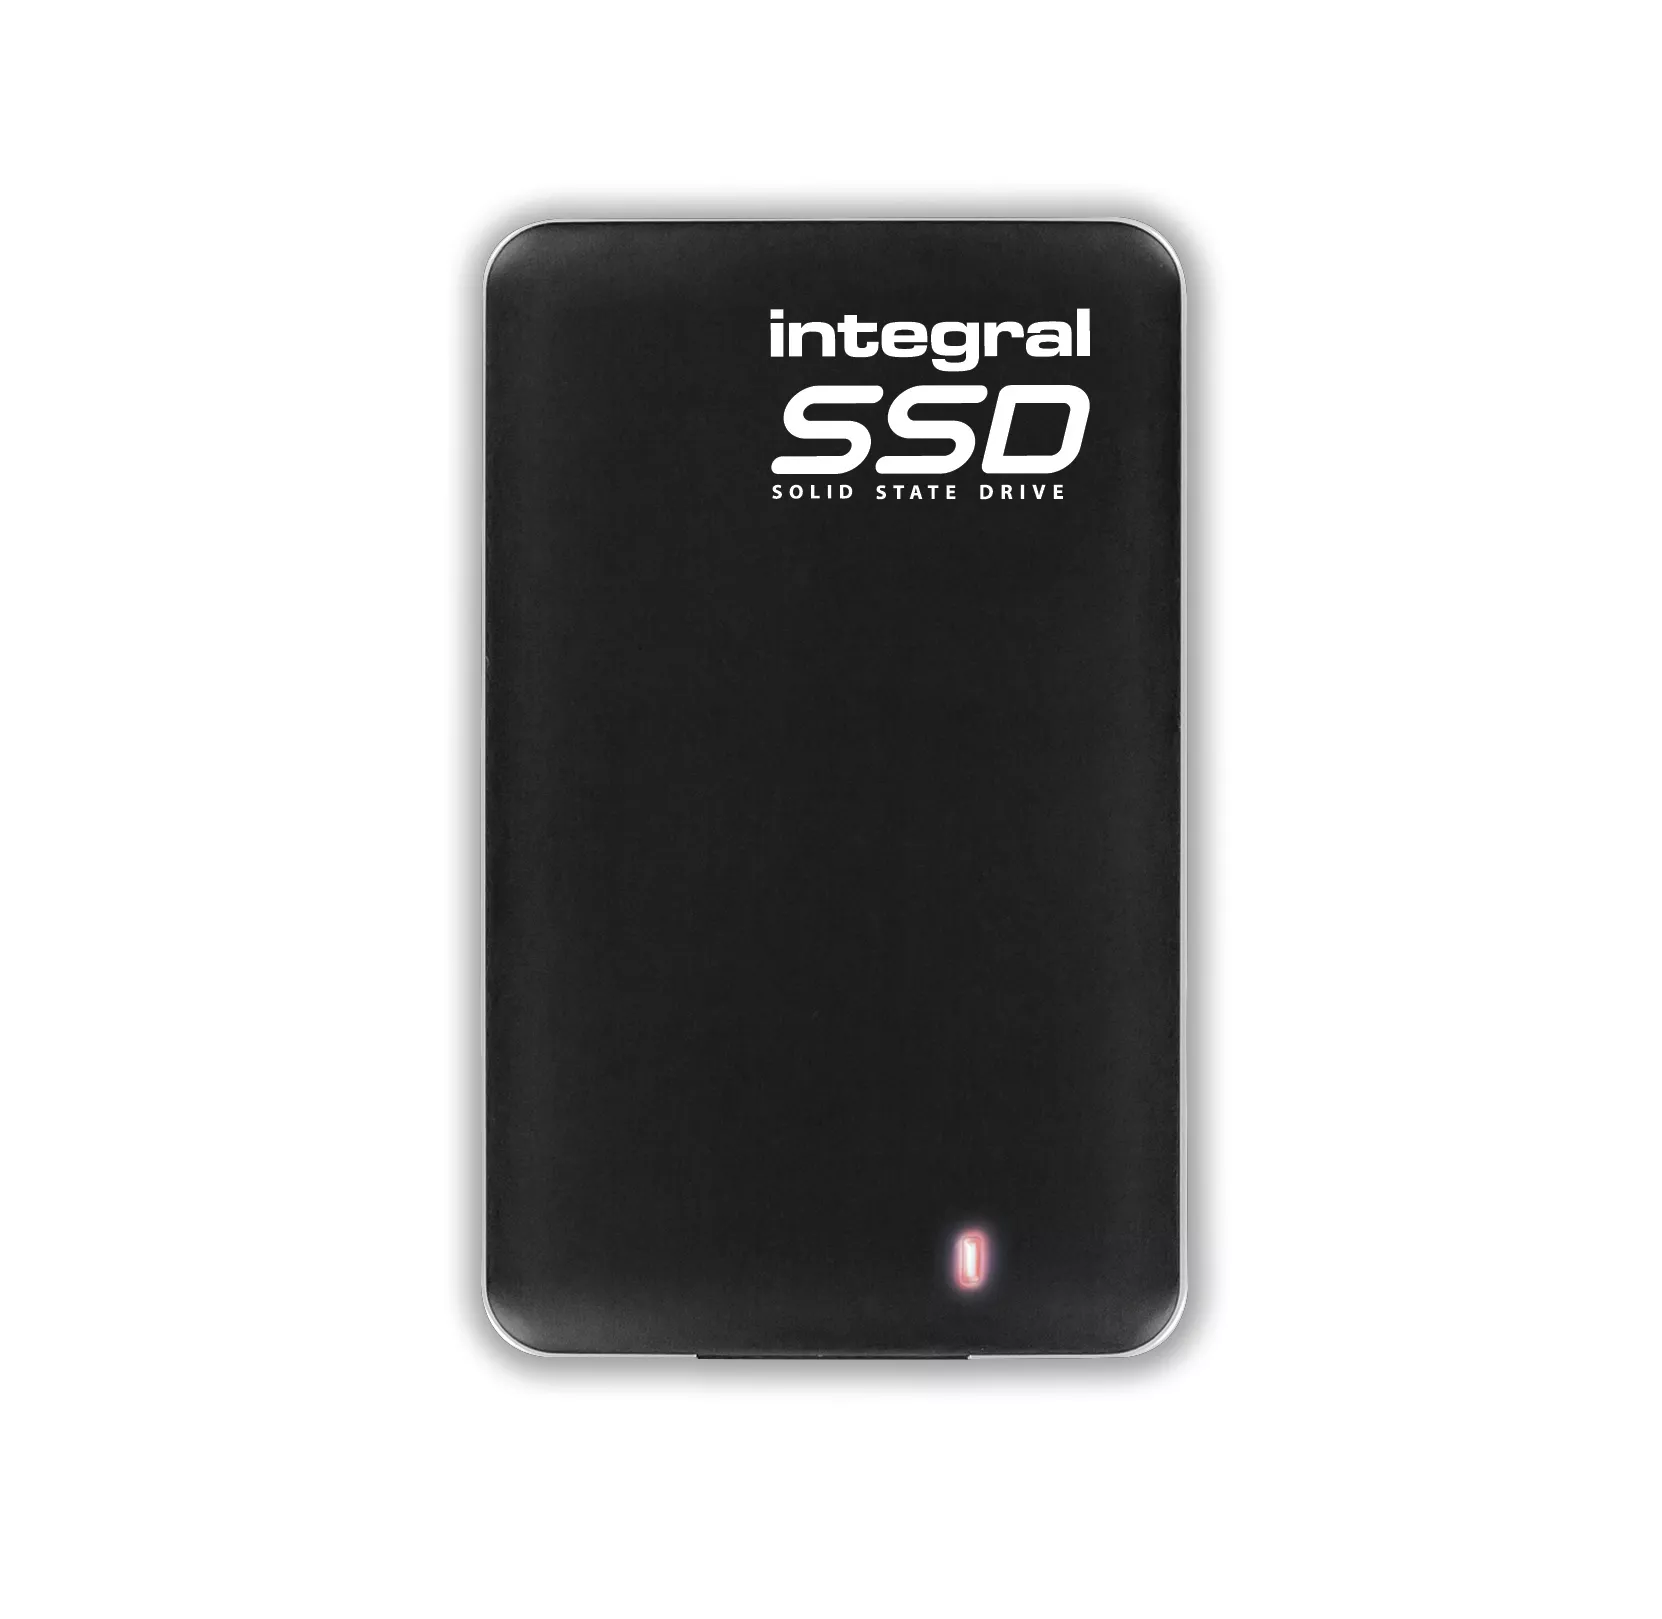 Achat Integral 960GB USB 3.0 Portable SSD External et autres produits de la marque Integral